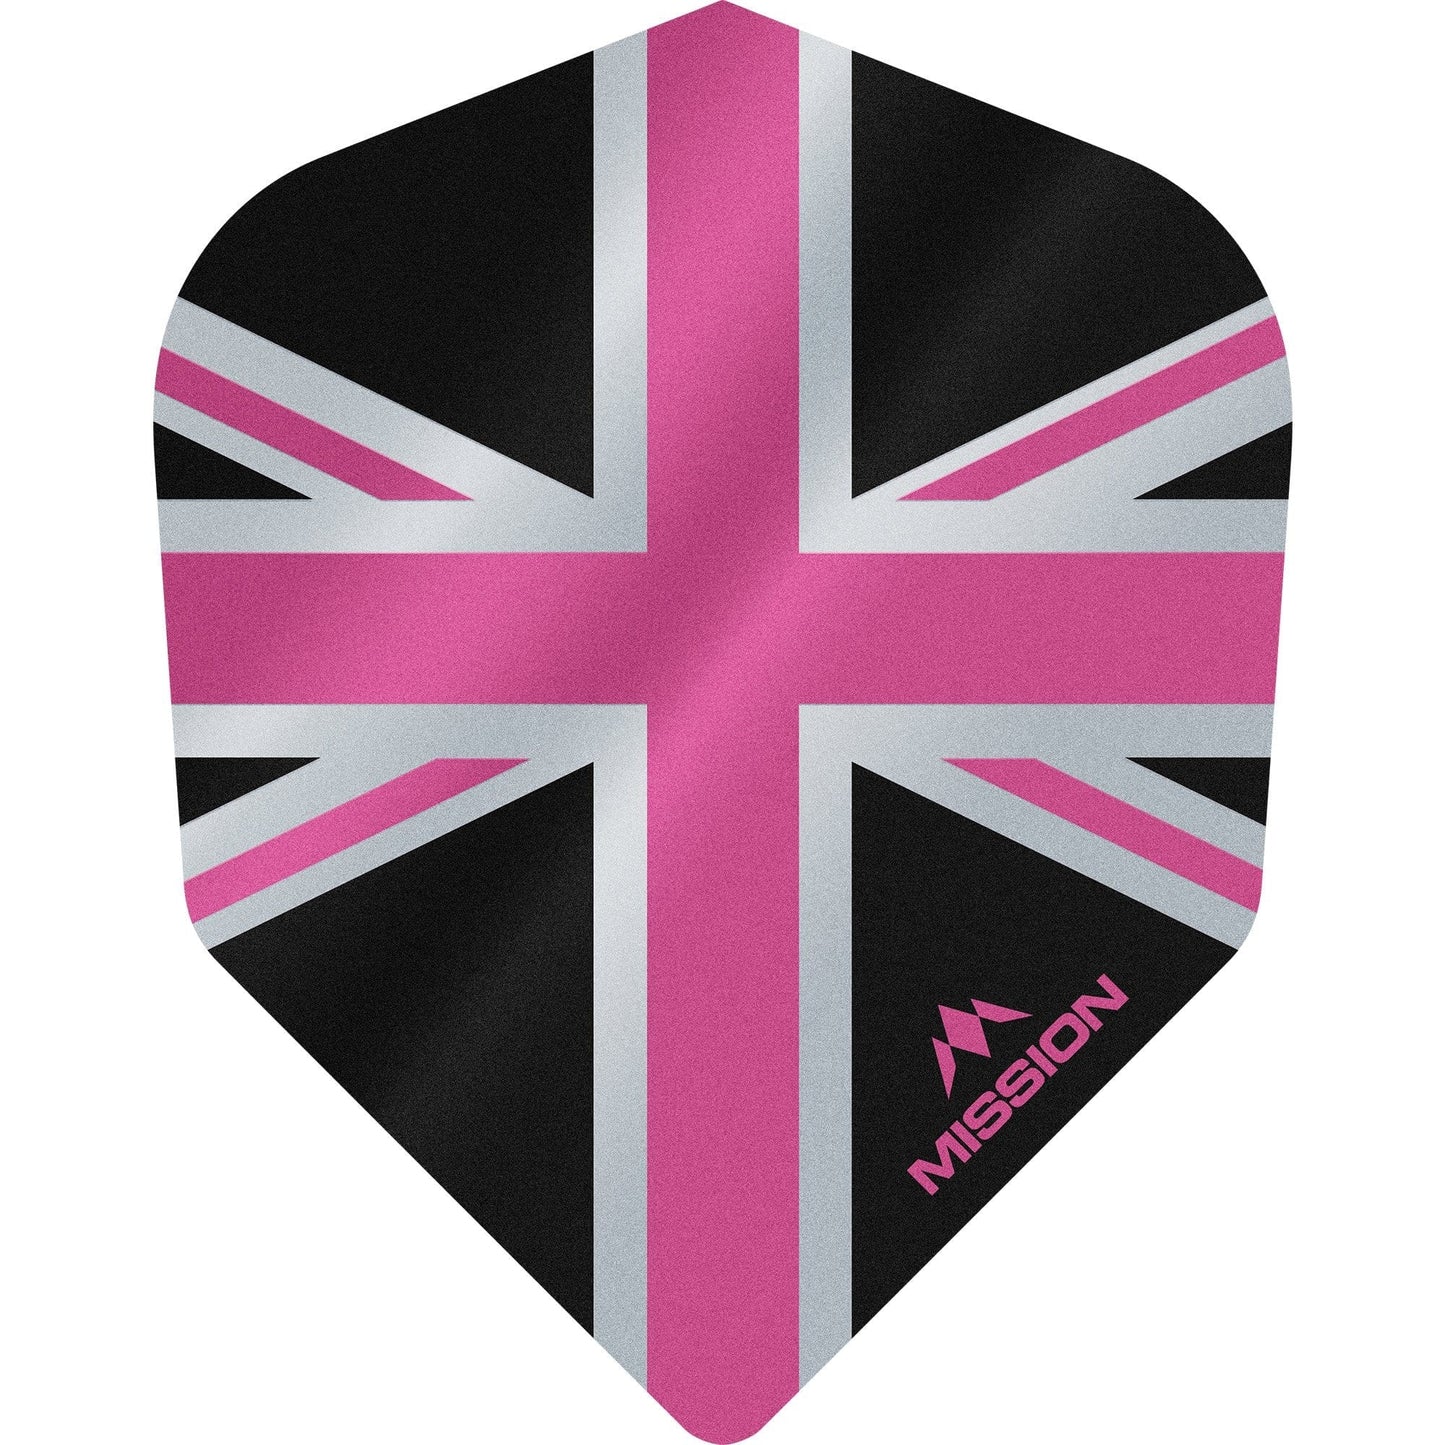 Mission Alliance Union Jack Dart Flights - No6 - Std - Black Black Pink